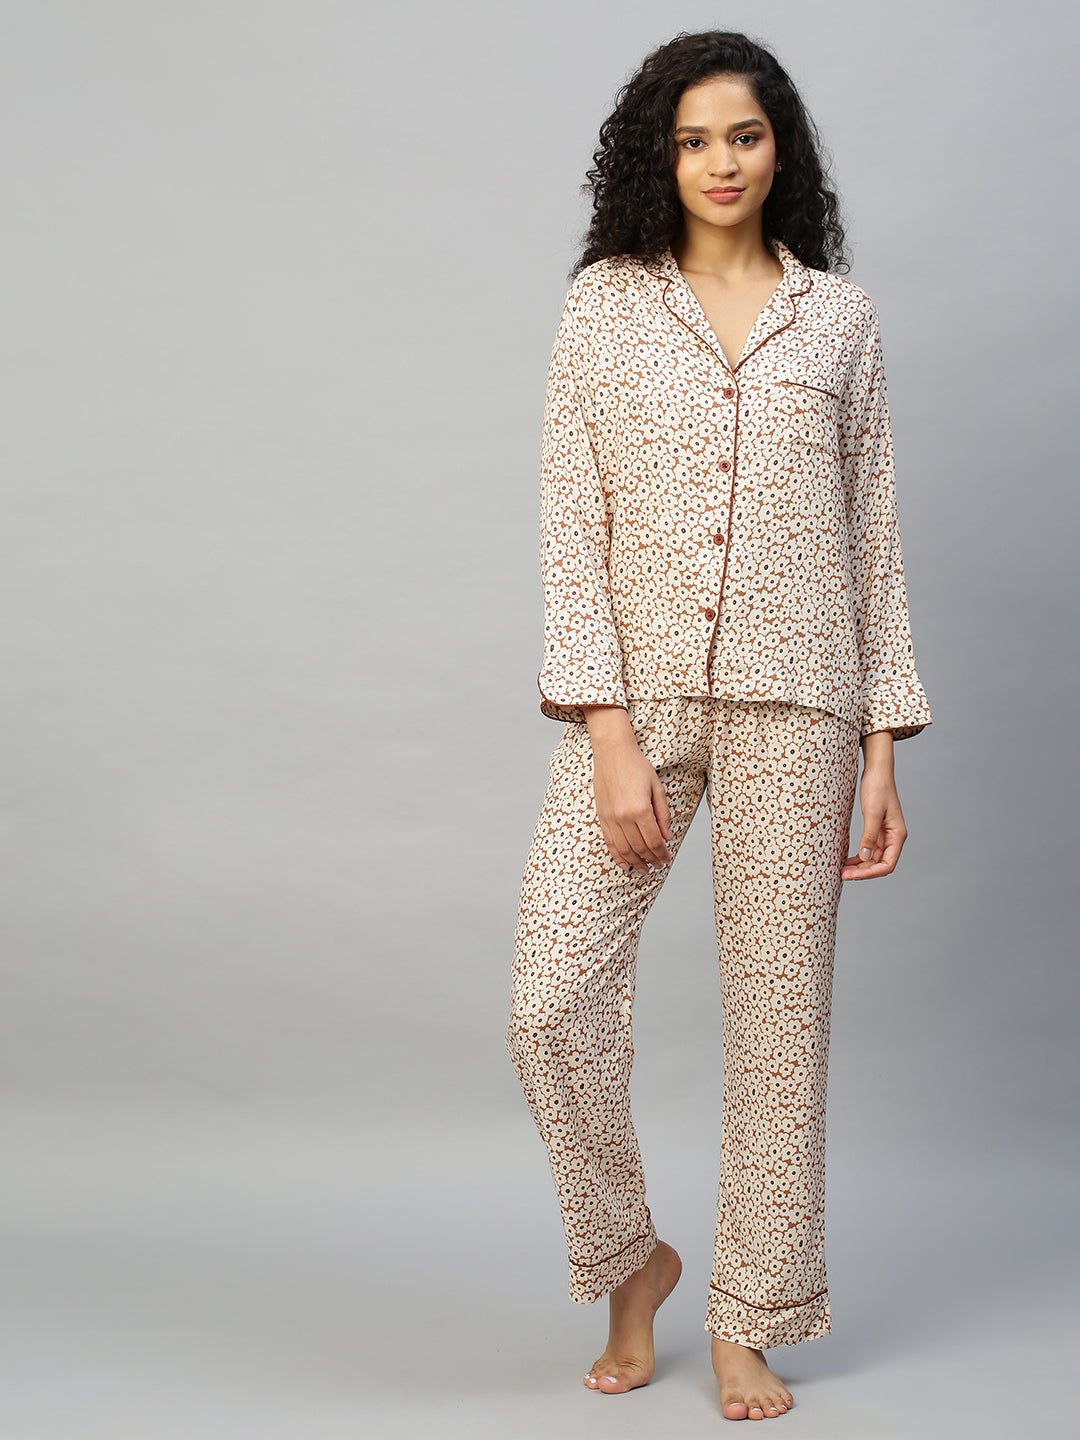 LSFYSZD Women's Pajama Set Short Sleeve V Neck T-shirt and Capri Pants  Sleepwear Contrast Color/Floral/Leopard Lounge Suits - Walmart.com